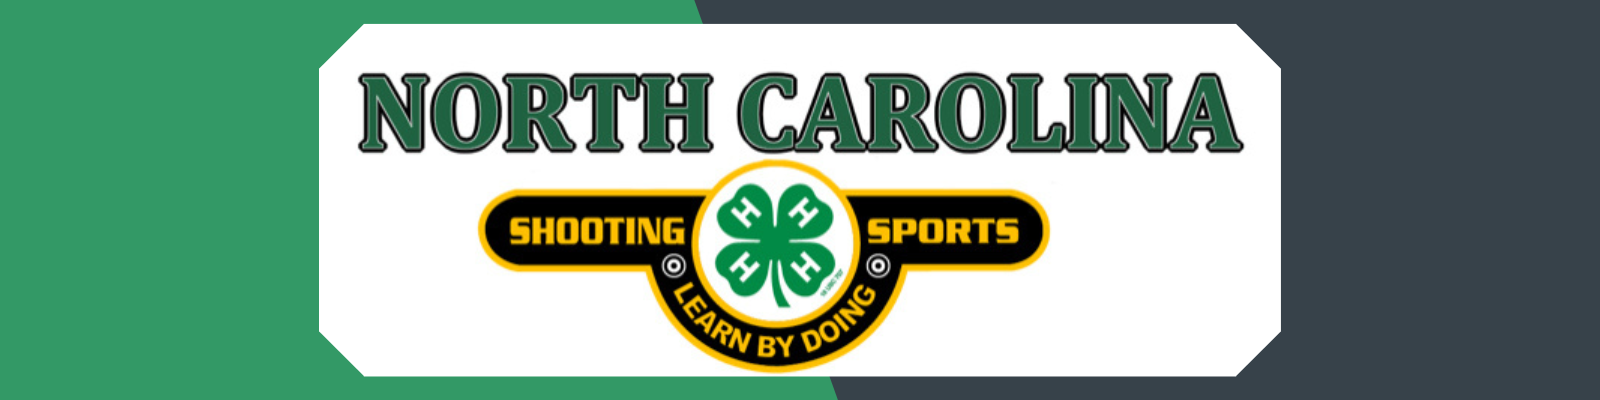 NC 4-H Shooting Sports logo